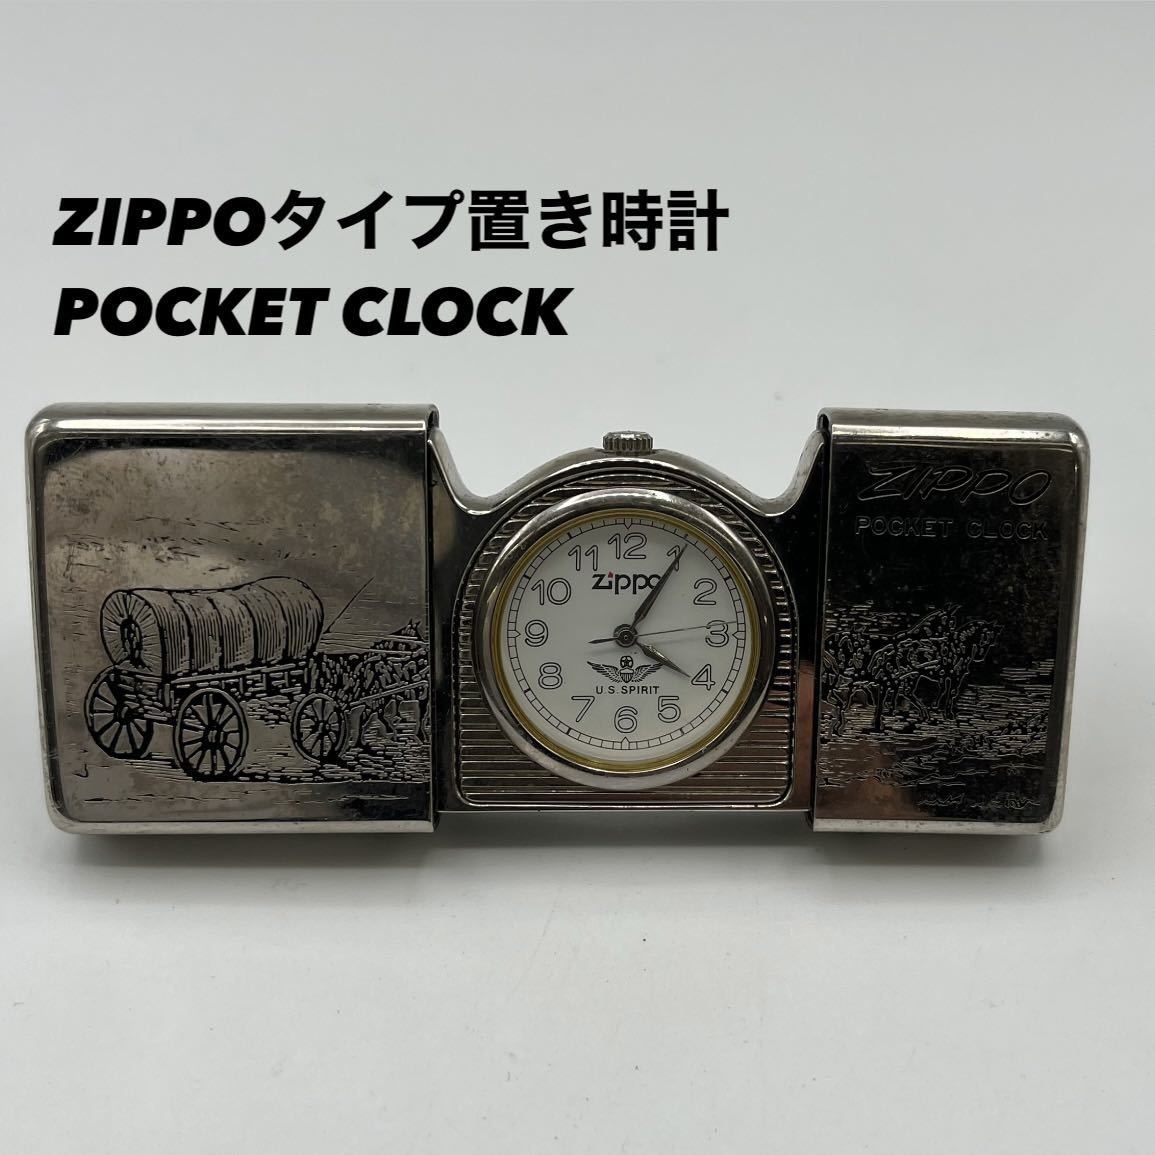 82 ZIPPO Zippo ジッポー ジッポ POCKET CLOCK ポケットクロック US SPIRIT 置き時計 置時計 時計 クオーツ クォーツ ライター風 3針 TI_画像1